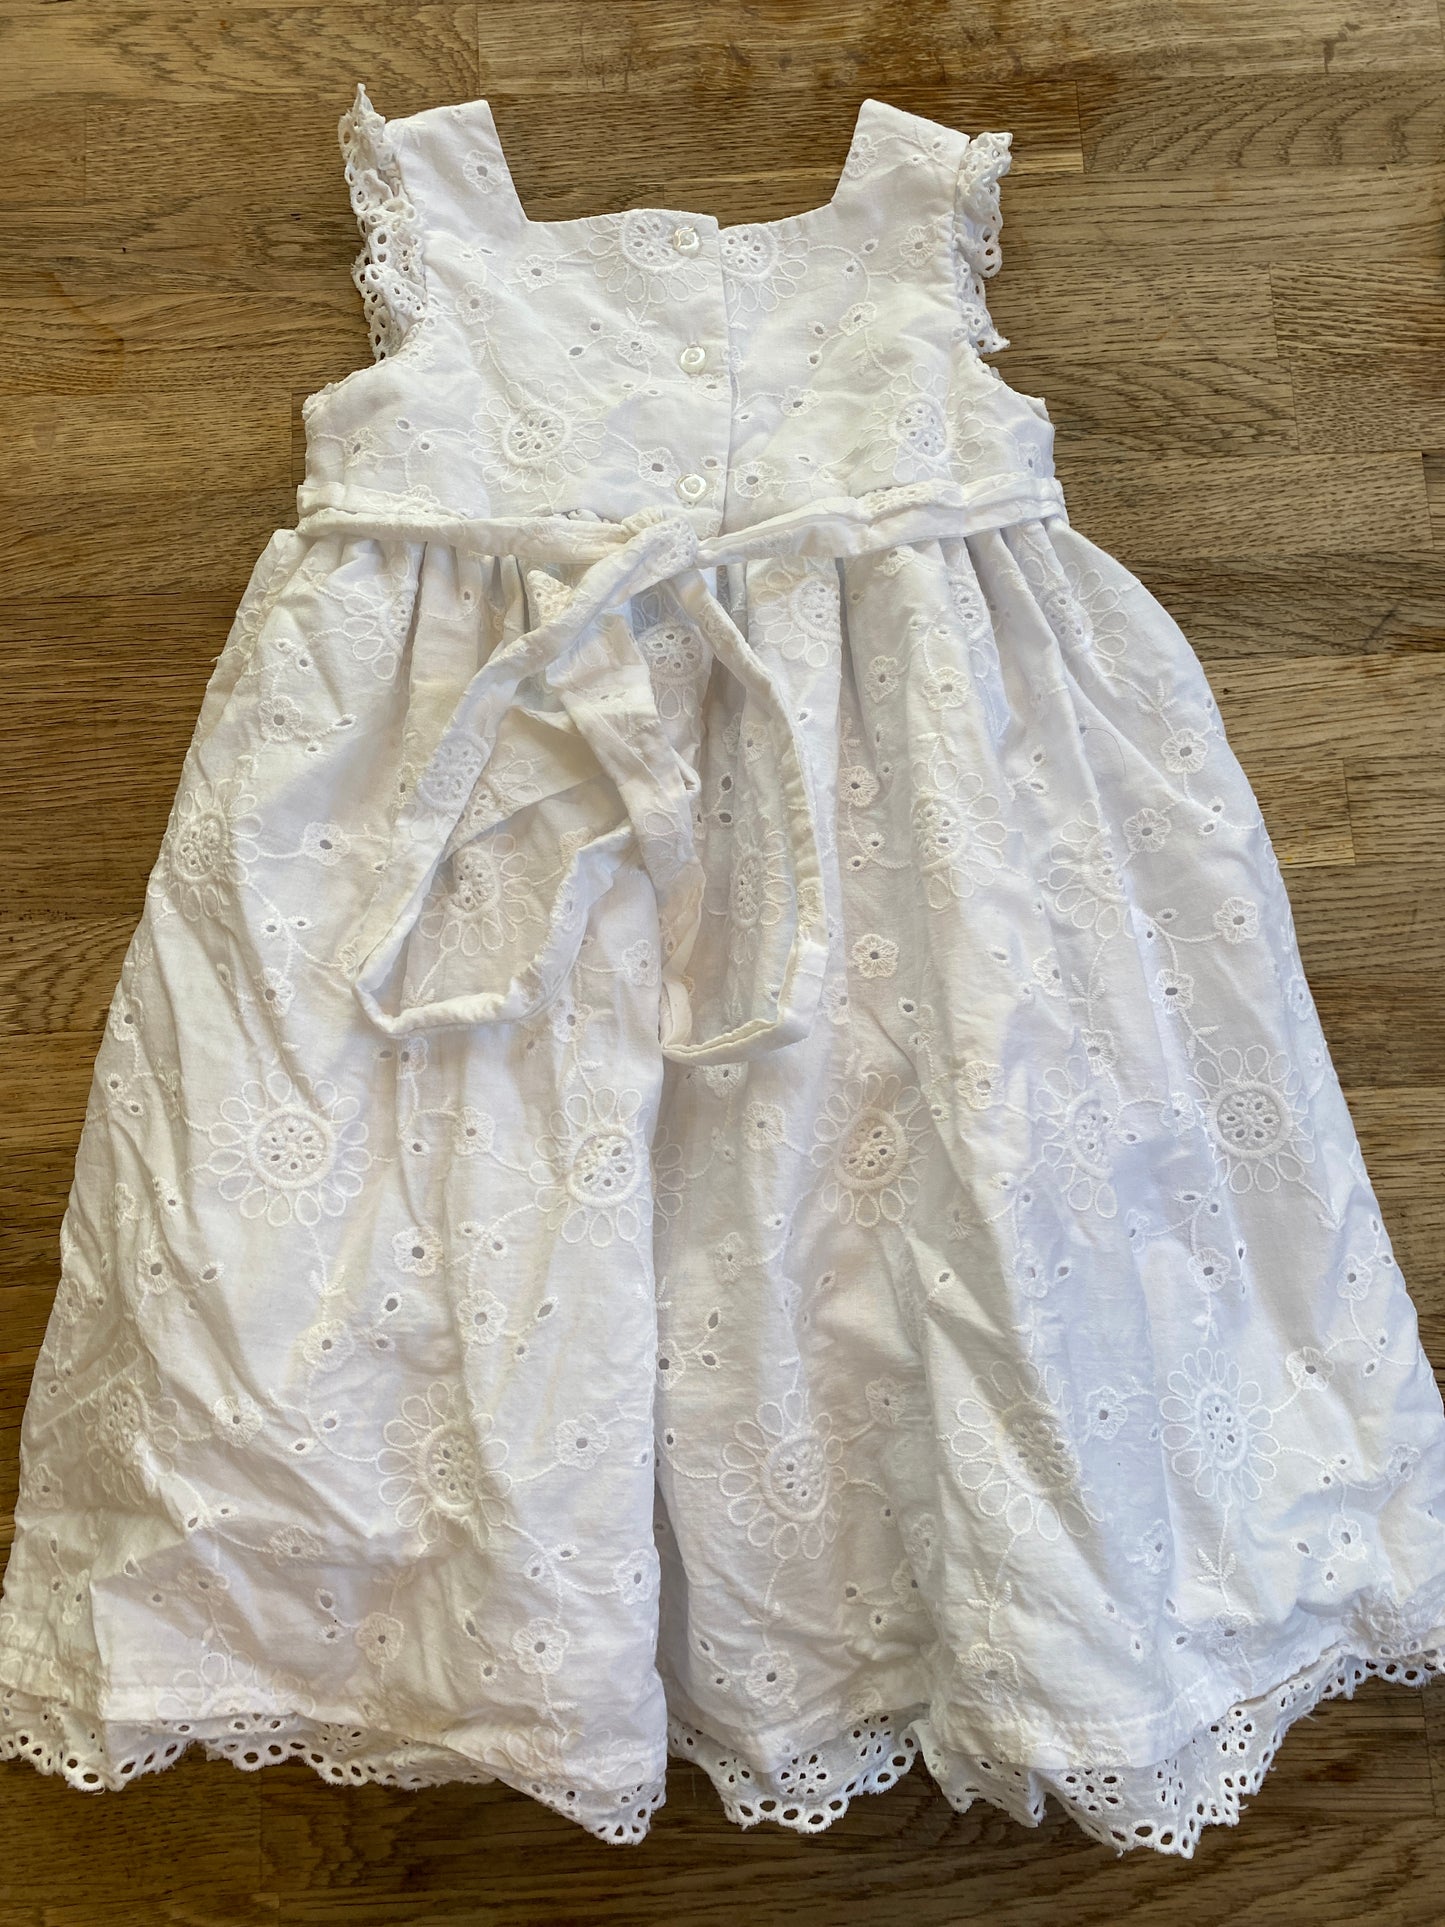 Laura Ashley White Eyelet Dress (Pre-Loved) 3t